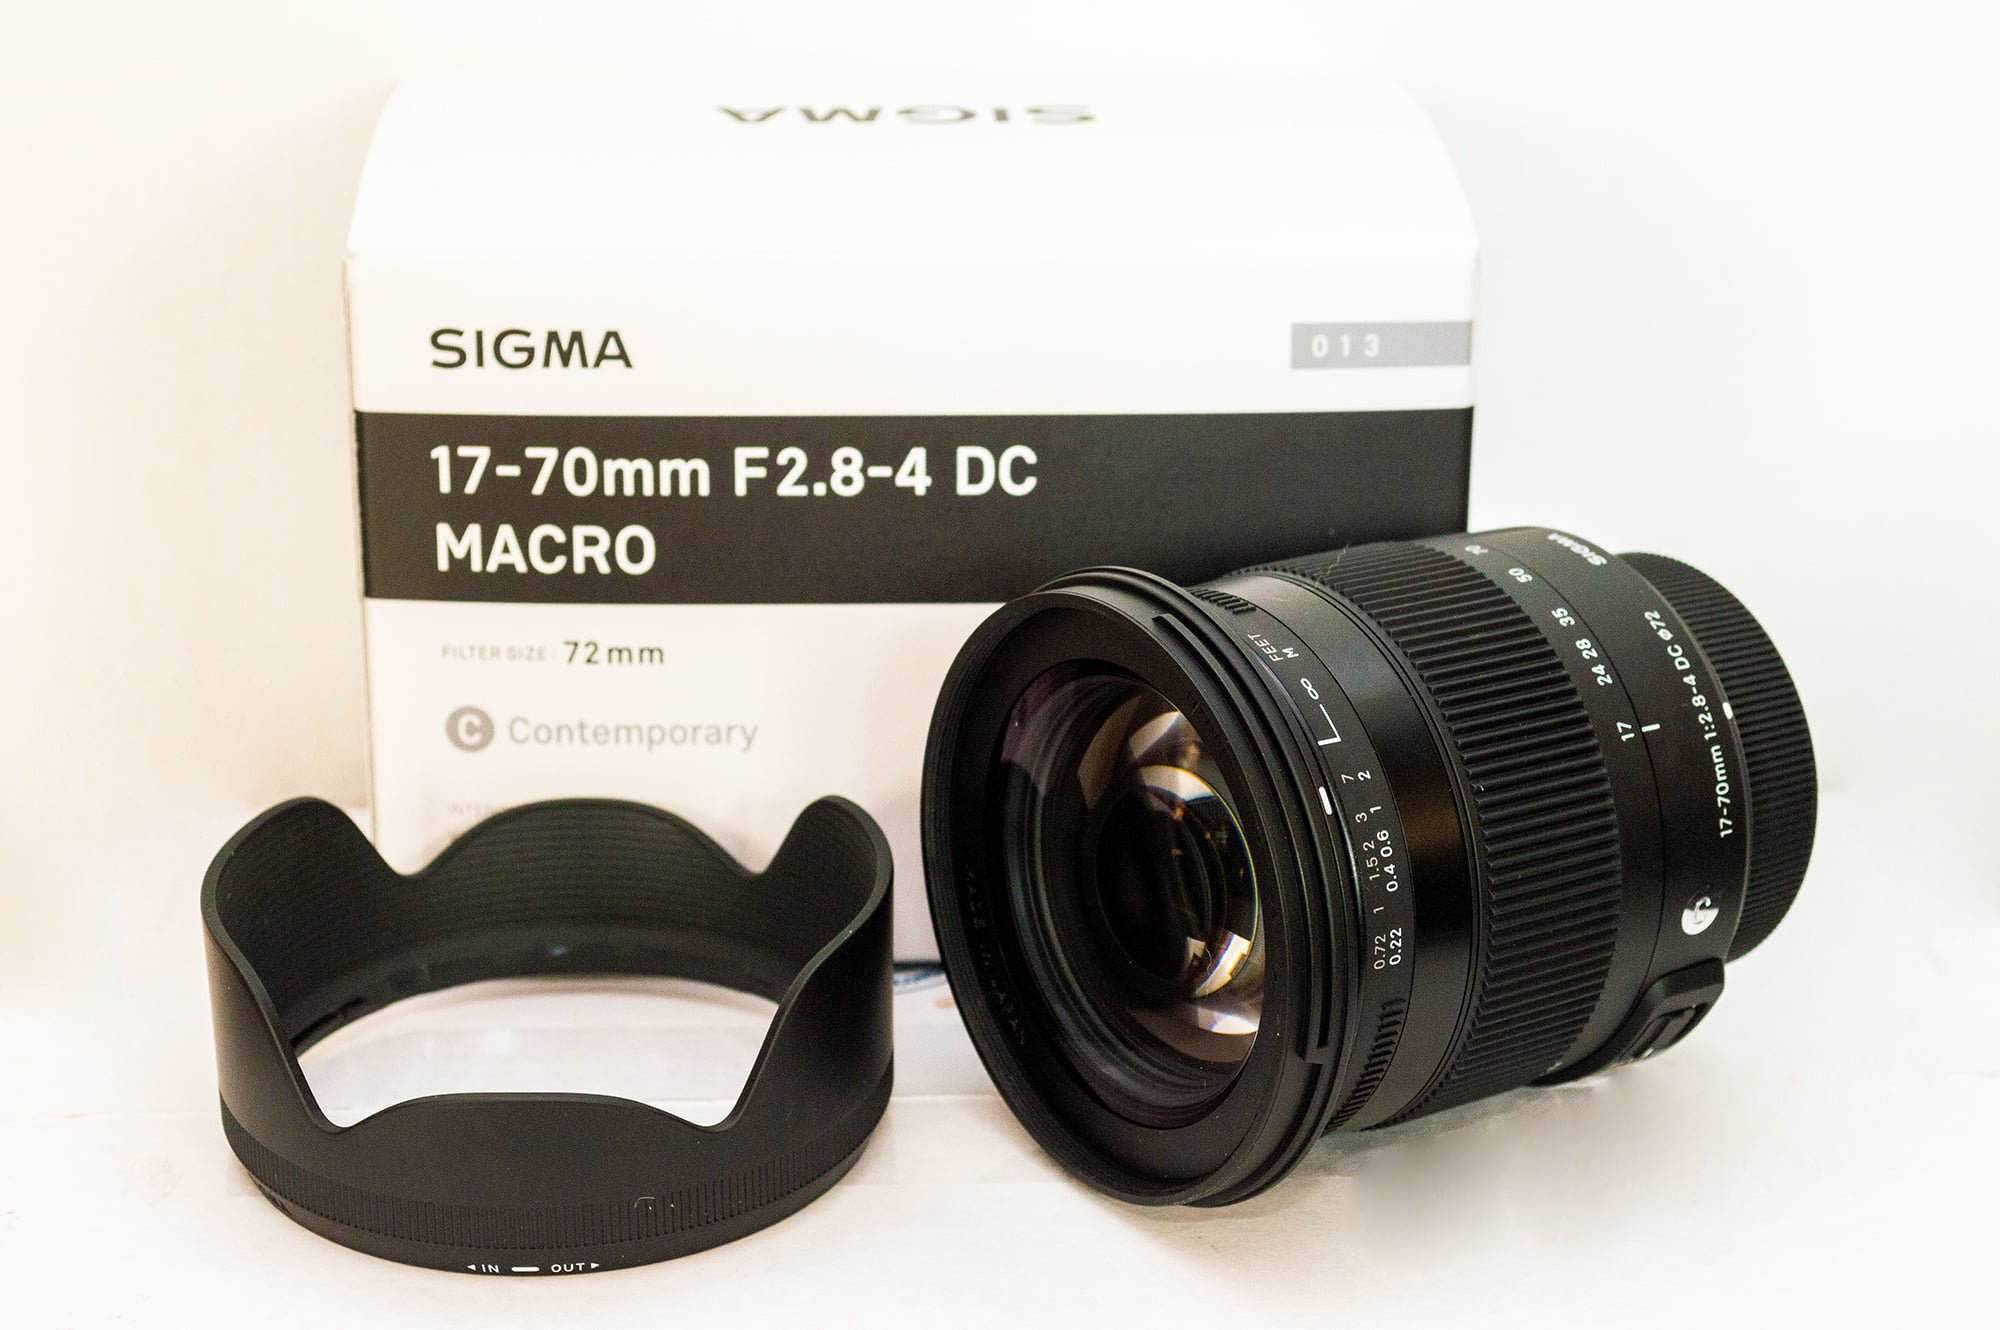 Sigma dc 17 70mm 2.8. Sigma af 17-70mm f/2.8-4 DC macro os HSM Nikon f. Sigma af 17-70mm f/2.8-4 DC macro os HSM Canon EF-S. Sigma 17-70mm f/2.8-4 DC macro. Sigma 17 70 Canon.